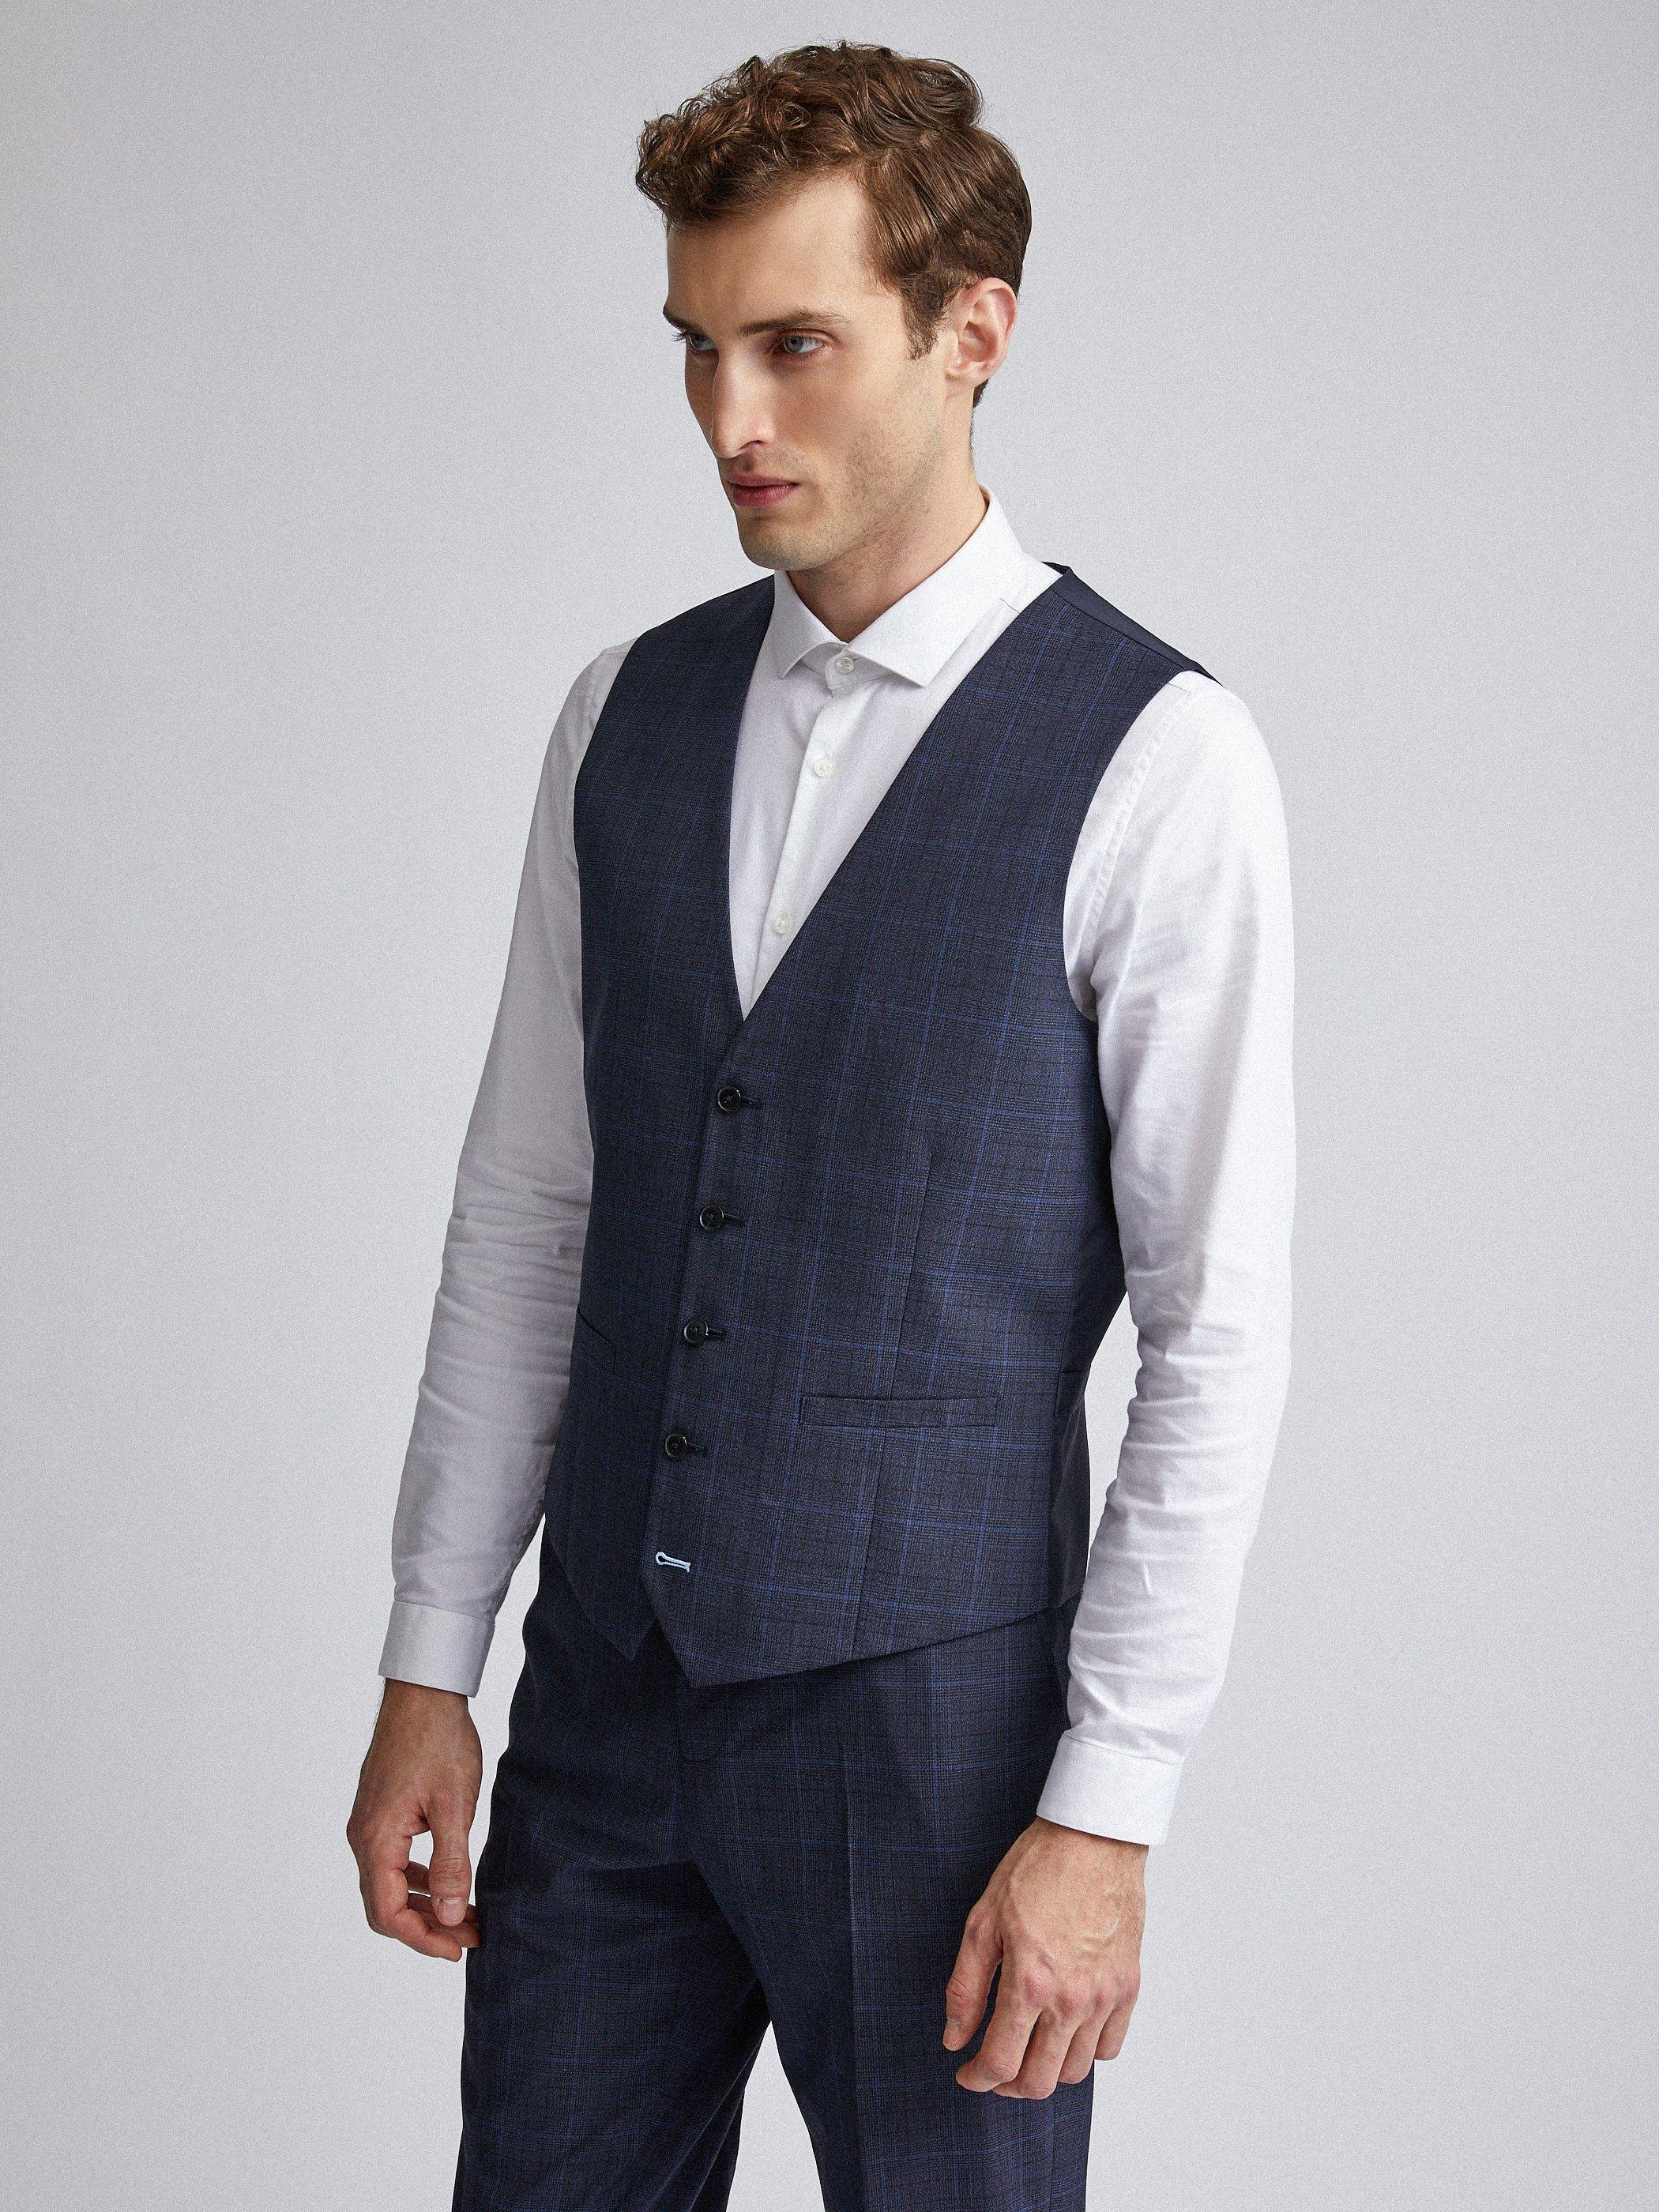 Suits | Tailored Fit Navy Tonal Check Suit Waistcoat | Burton